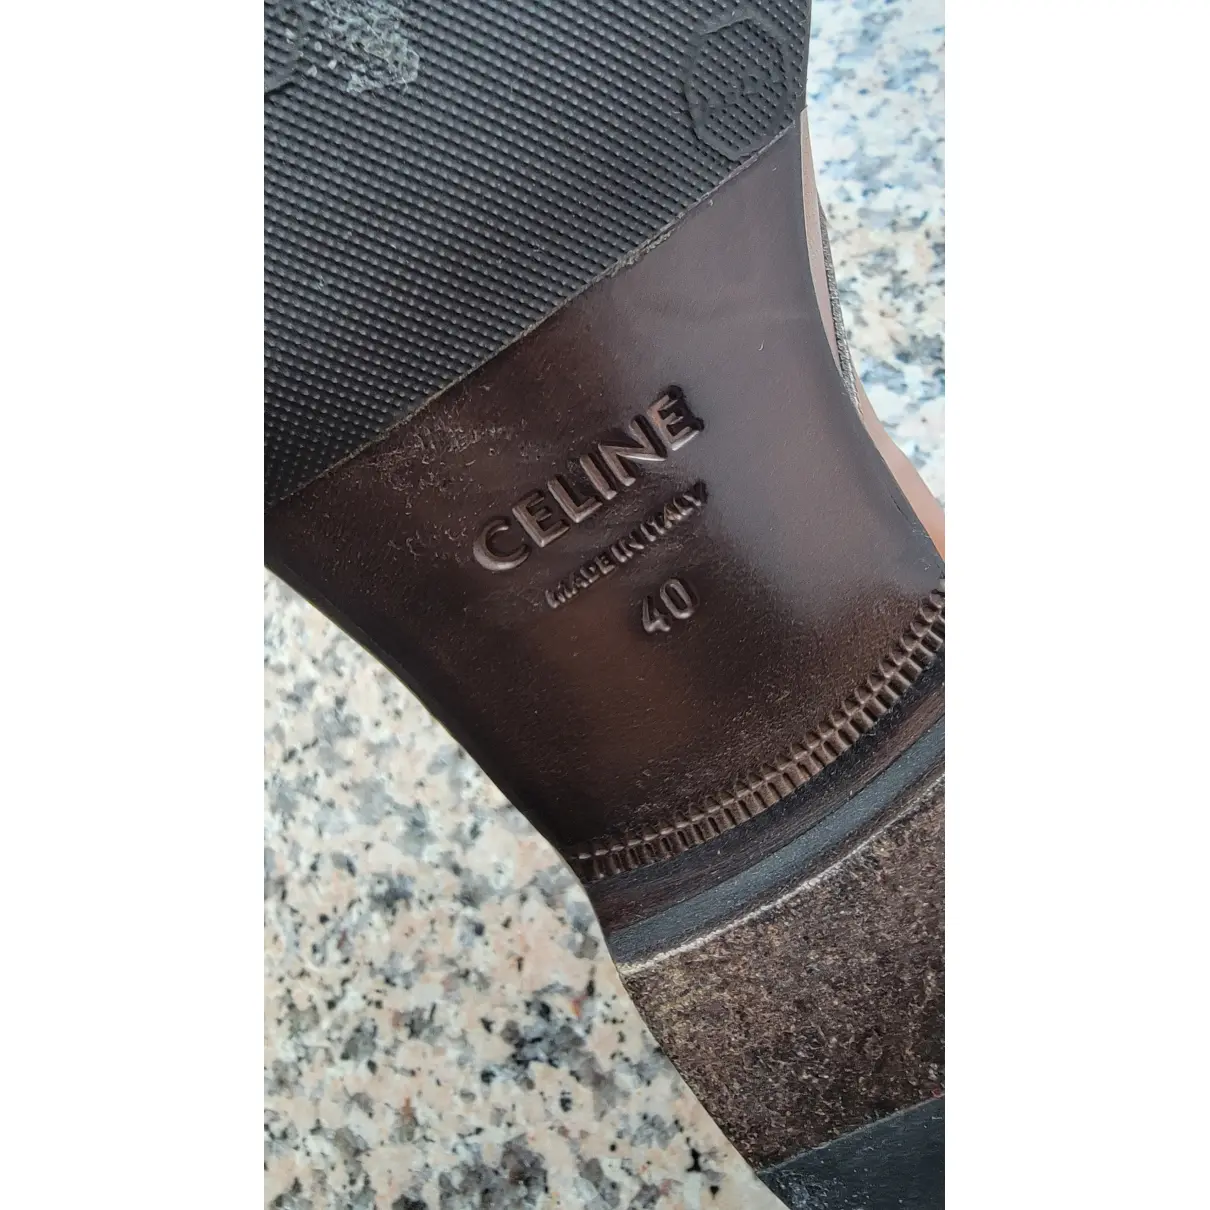 Buy Celine Jacno leather lace ups online